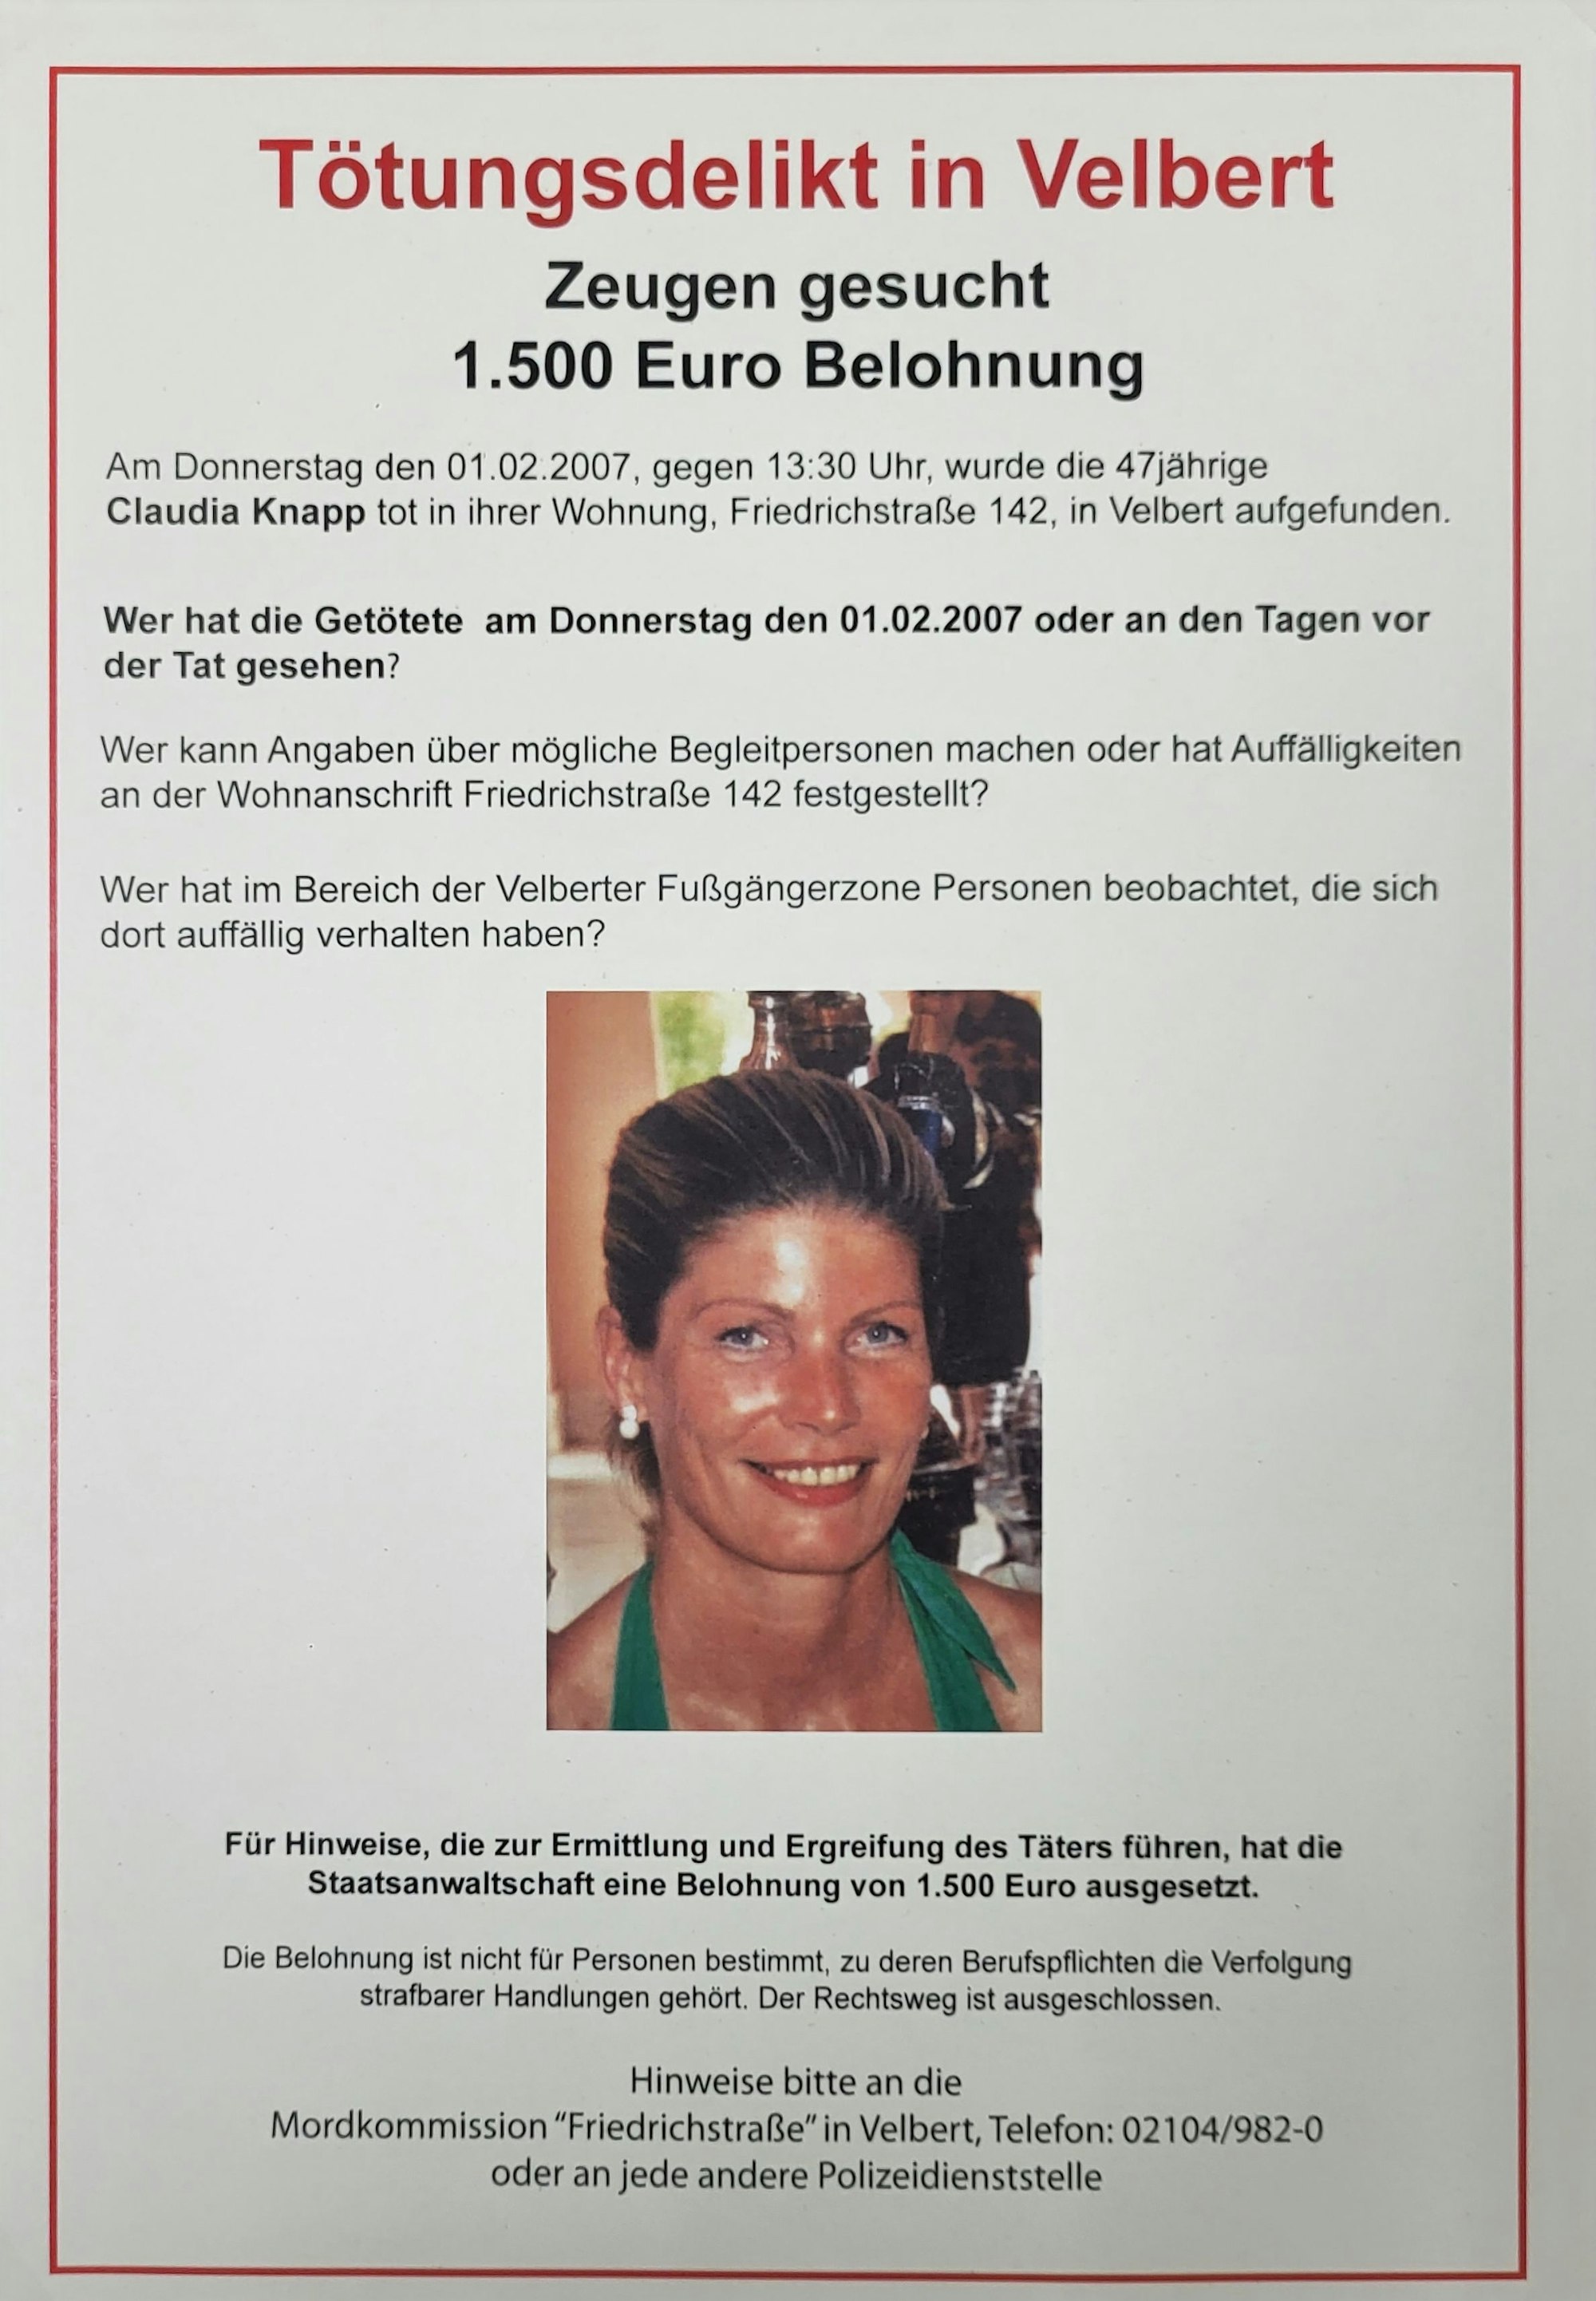 Fahndungsplakat zum Mord 2007 an der Stewardess Claudia Knapp in Velbert.